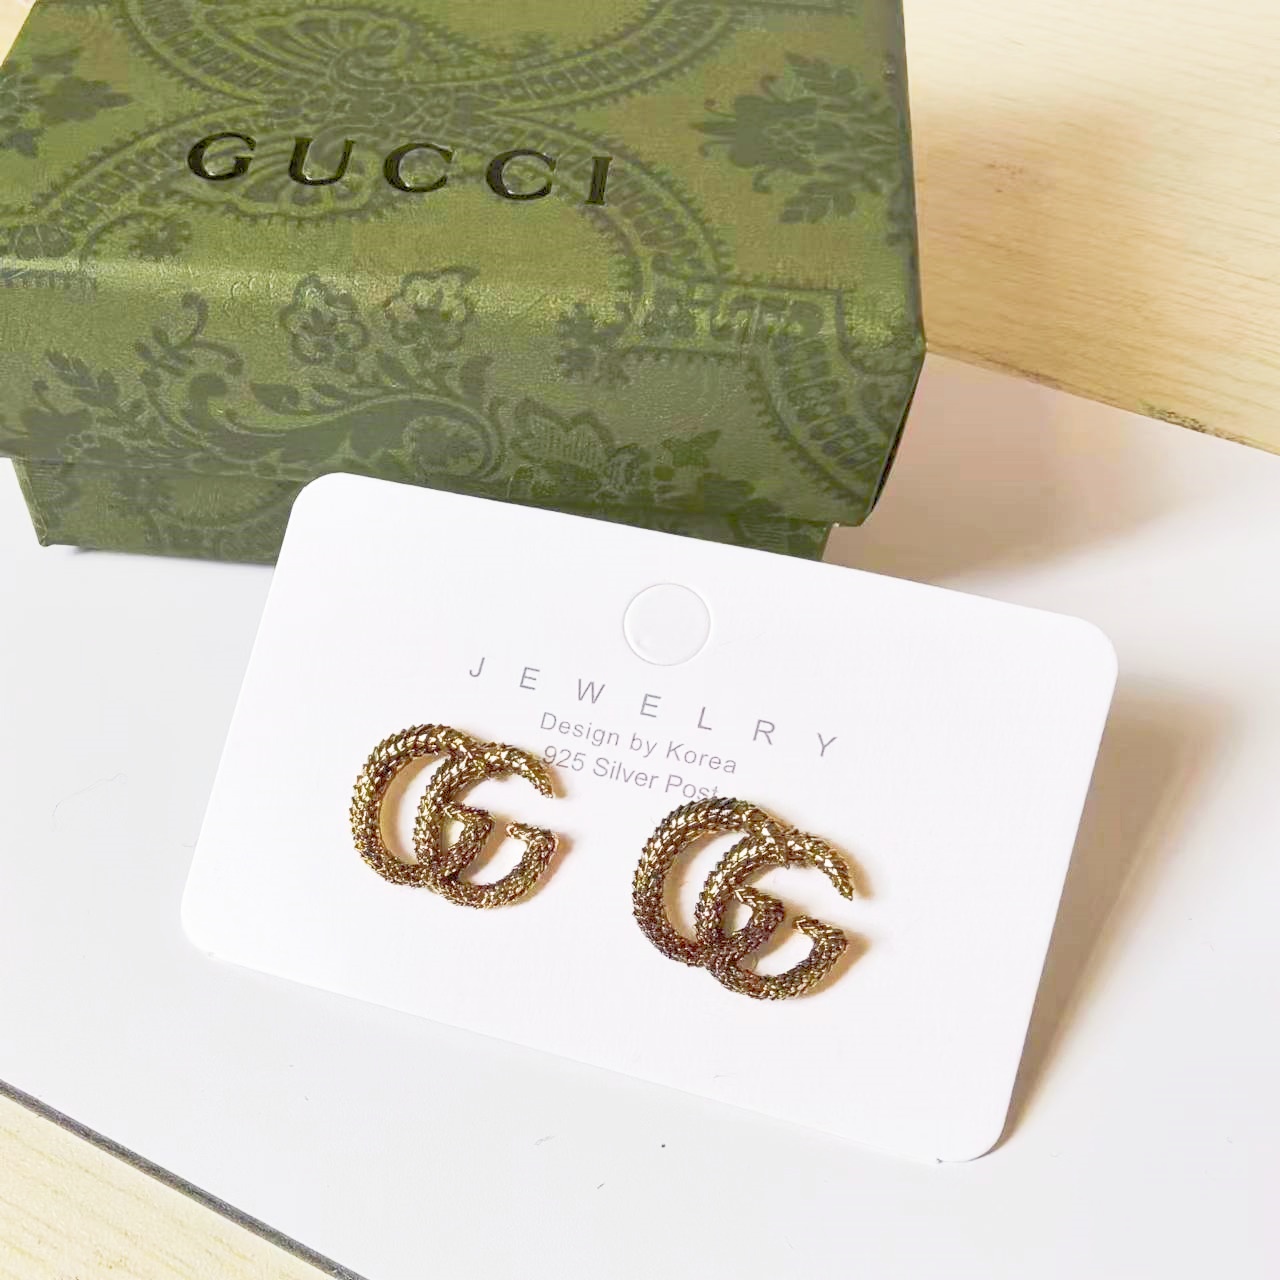 Big sale!Gucci bronze GG earrings